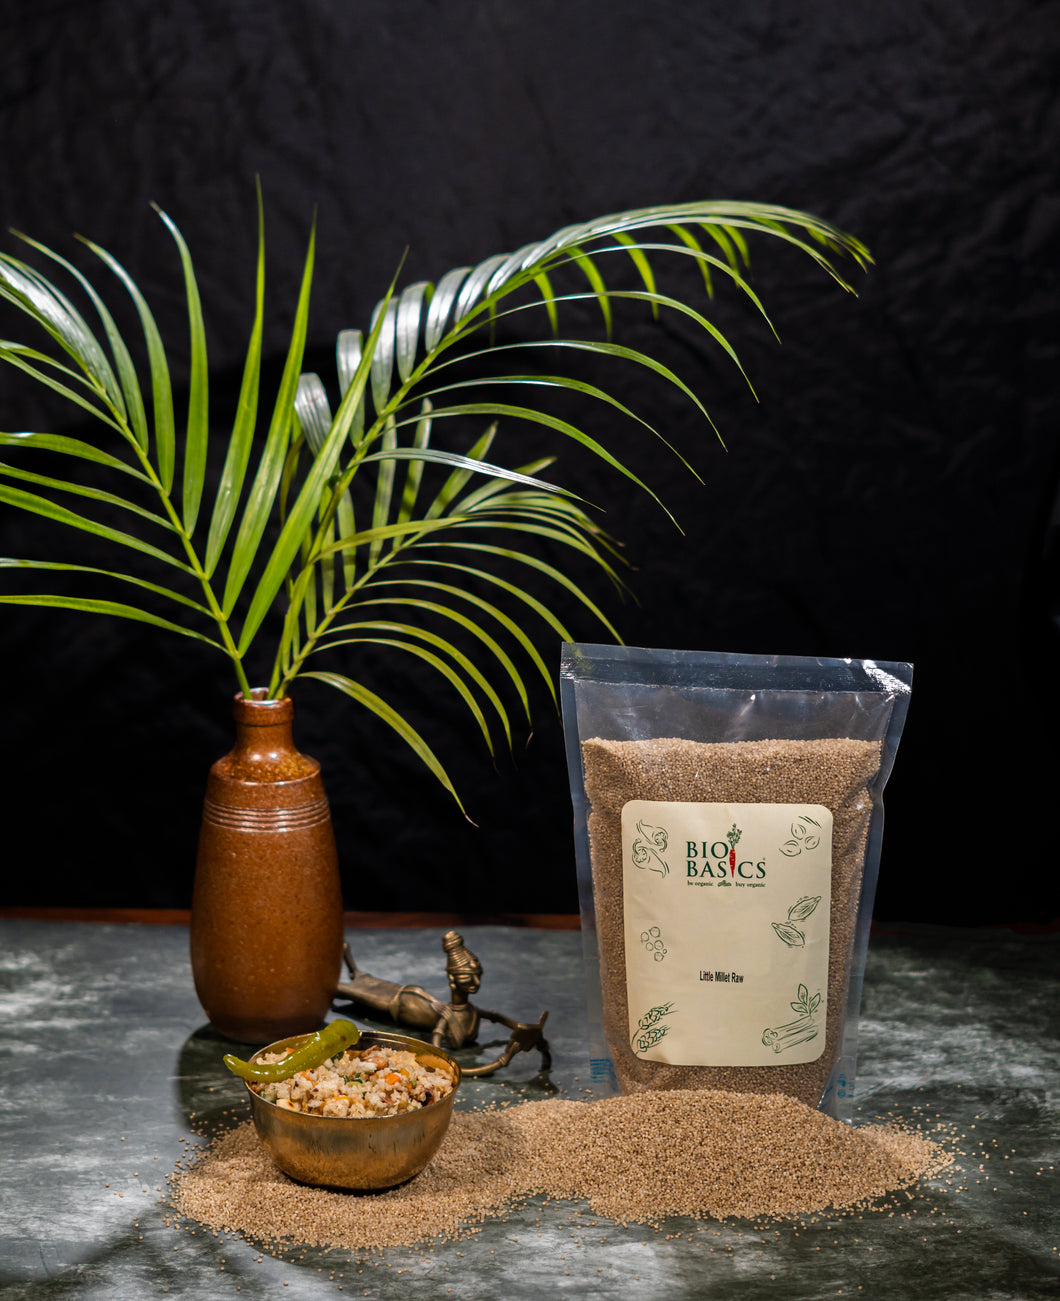 Buy organic little millet online at Bio Basics store